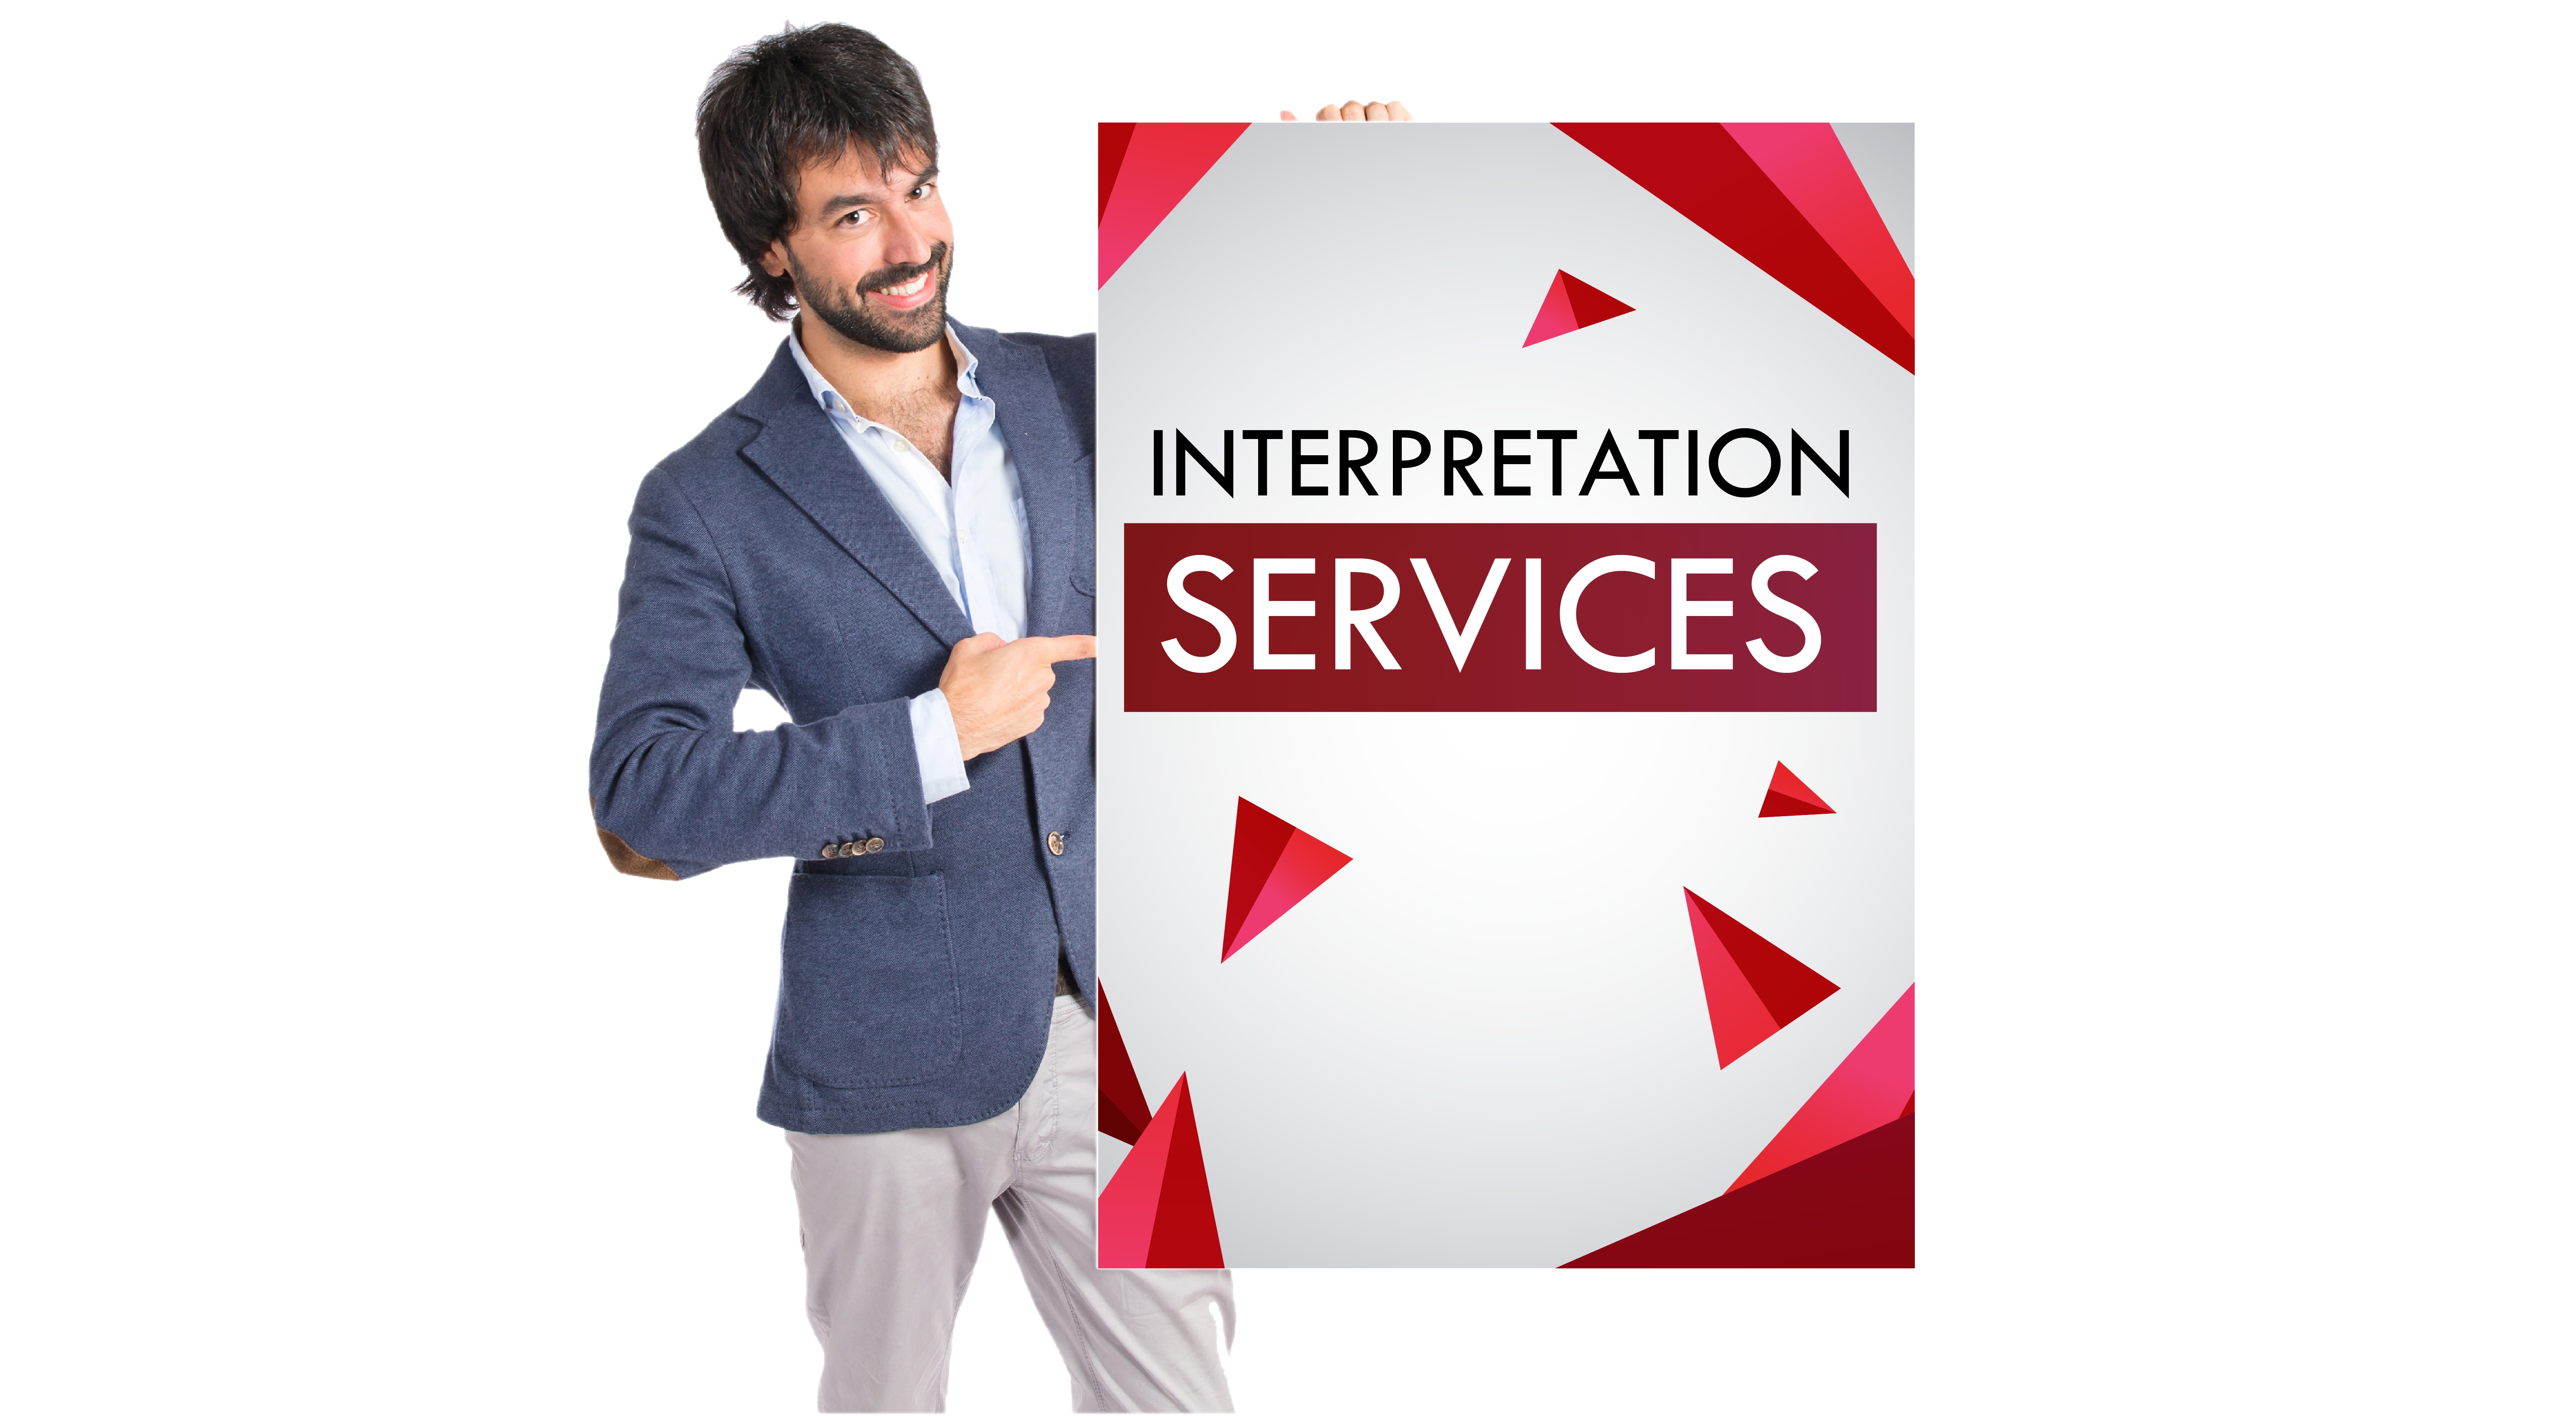 Interpretation services at langecole